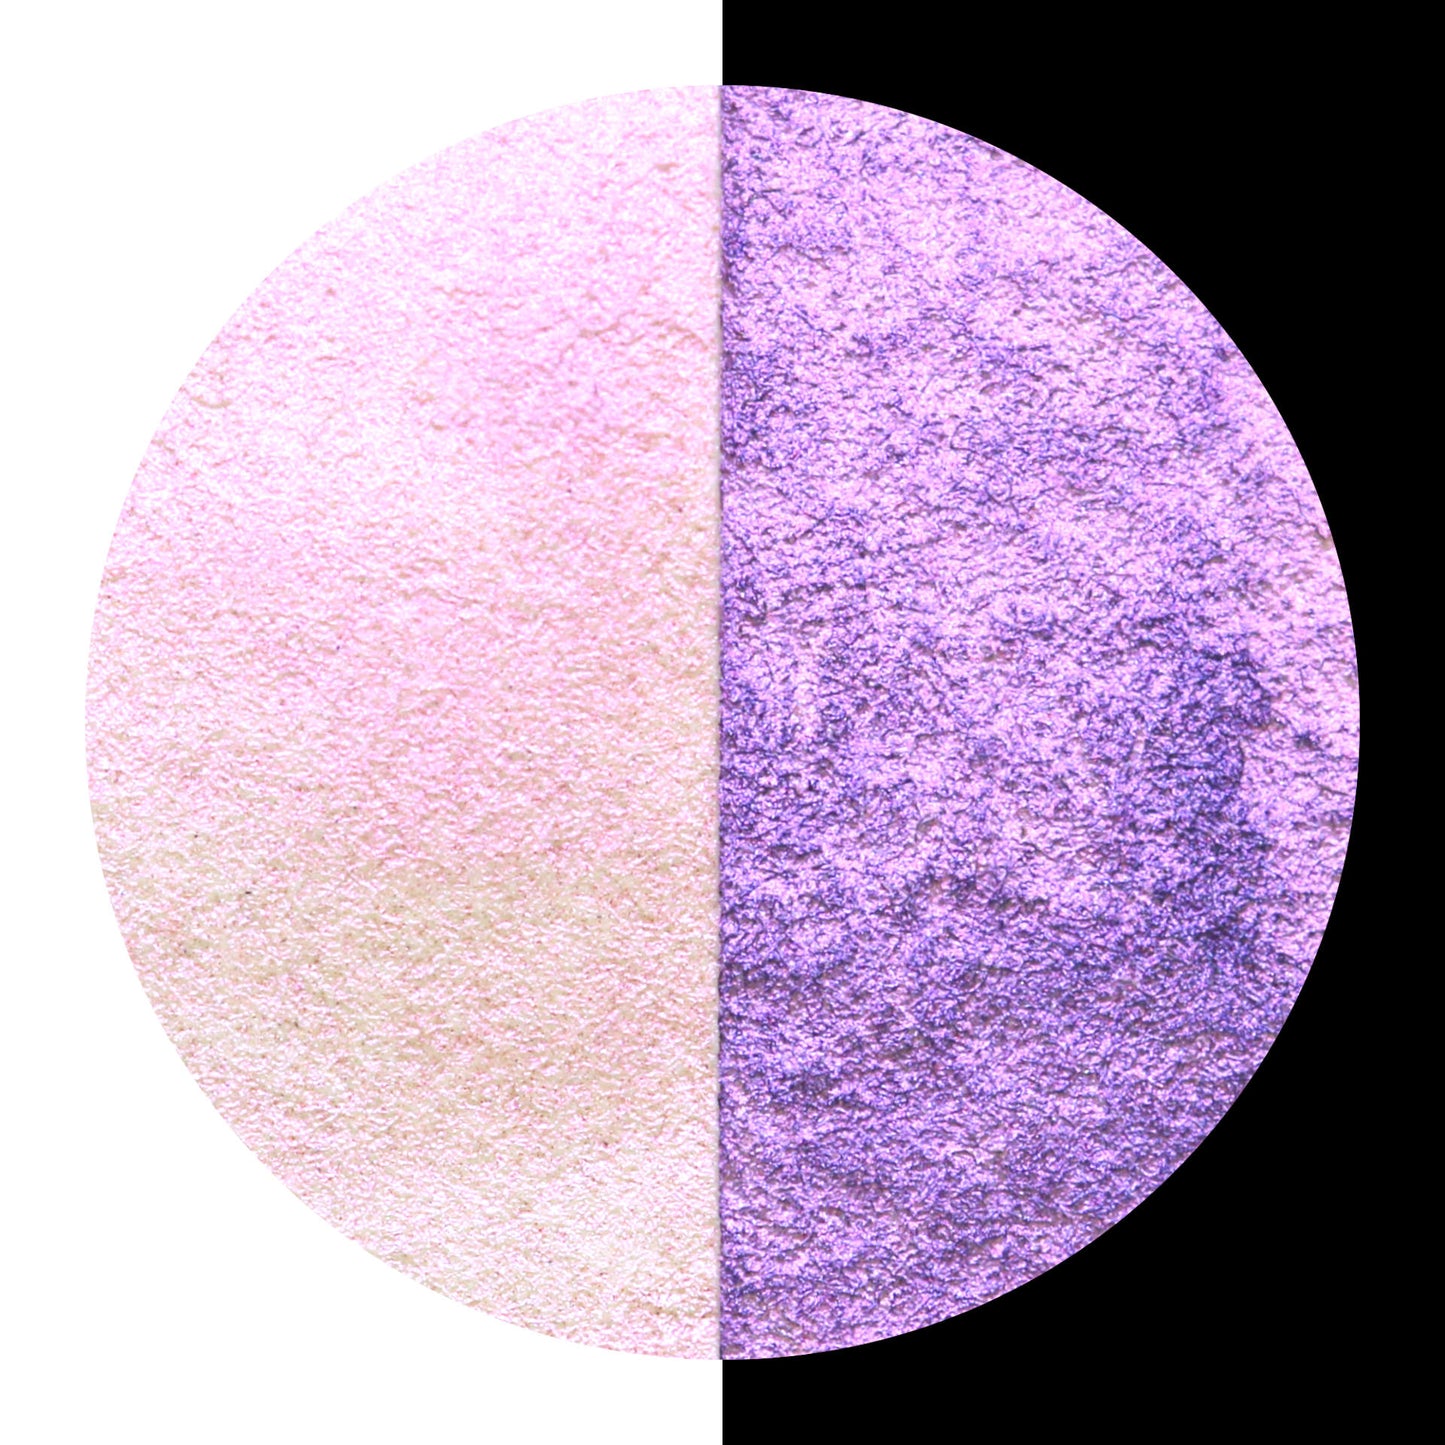 "Fine Lilac" Pearlcolor - Finetec Pan